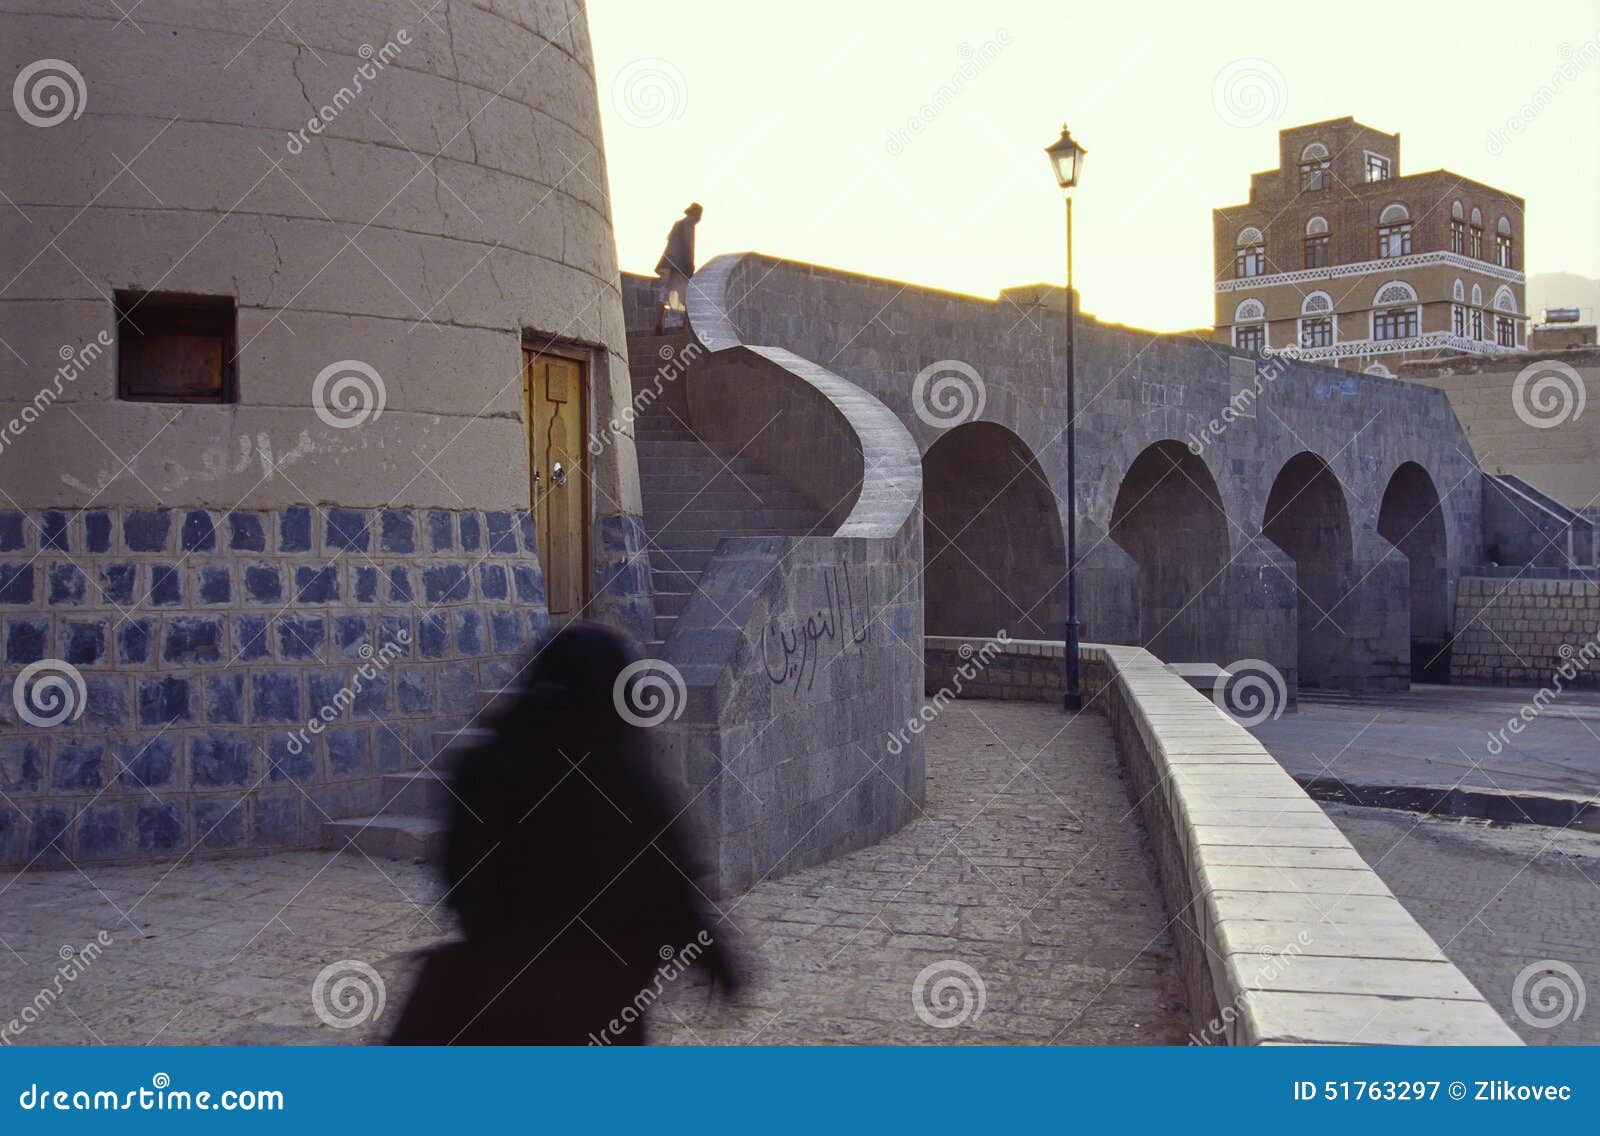 sana, capital city of yemen